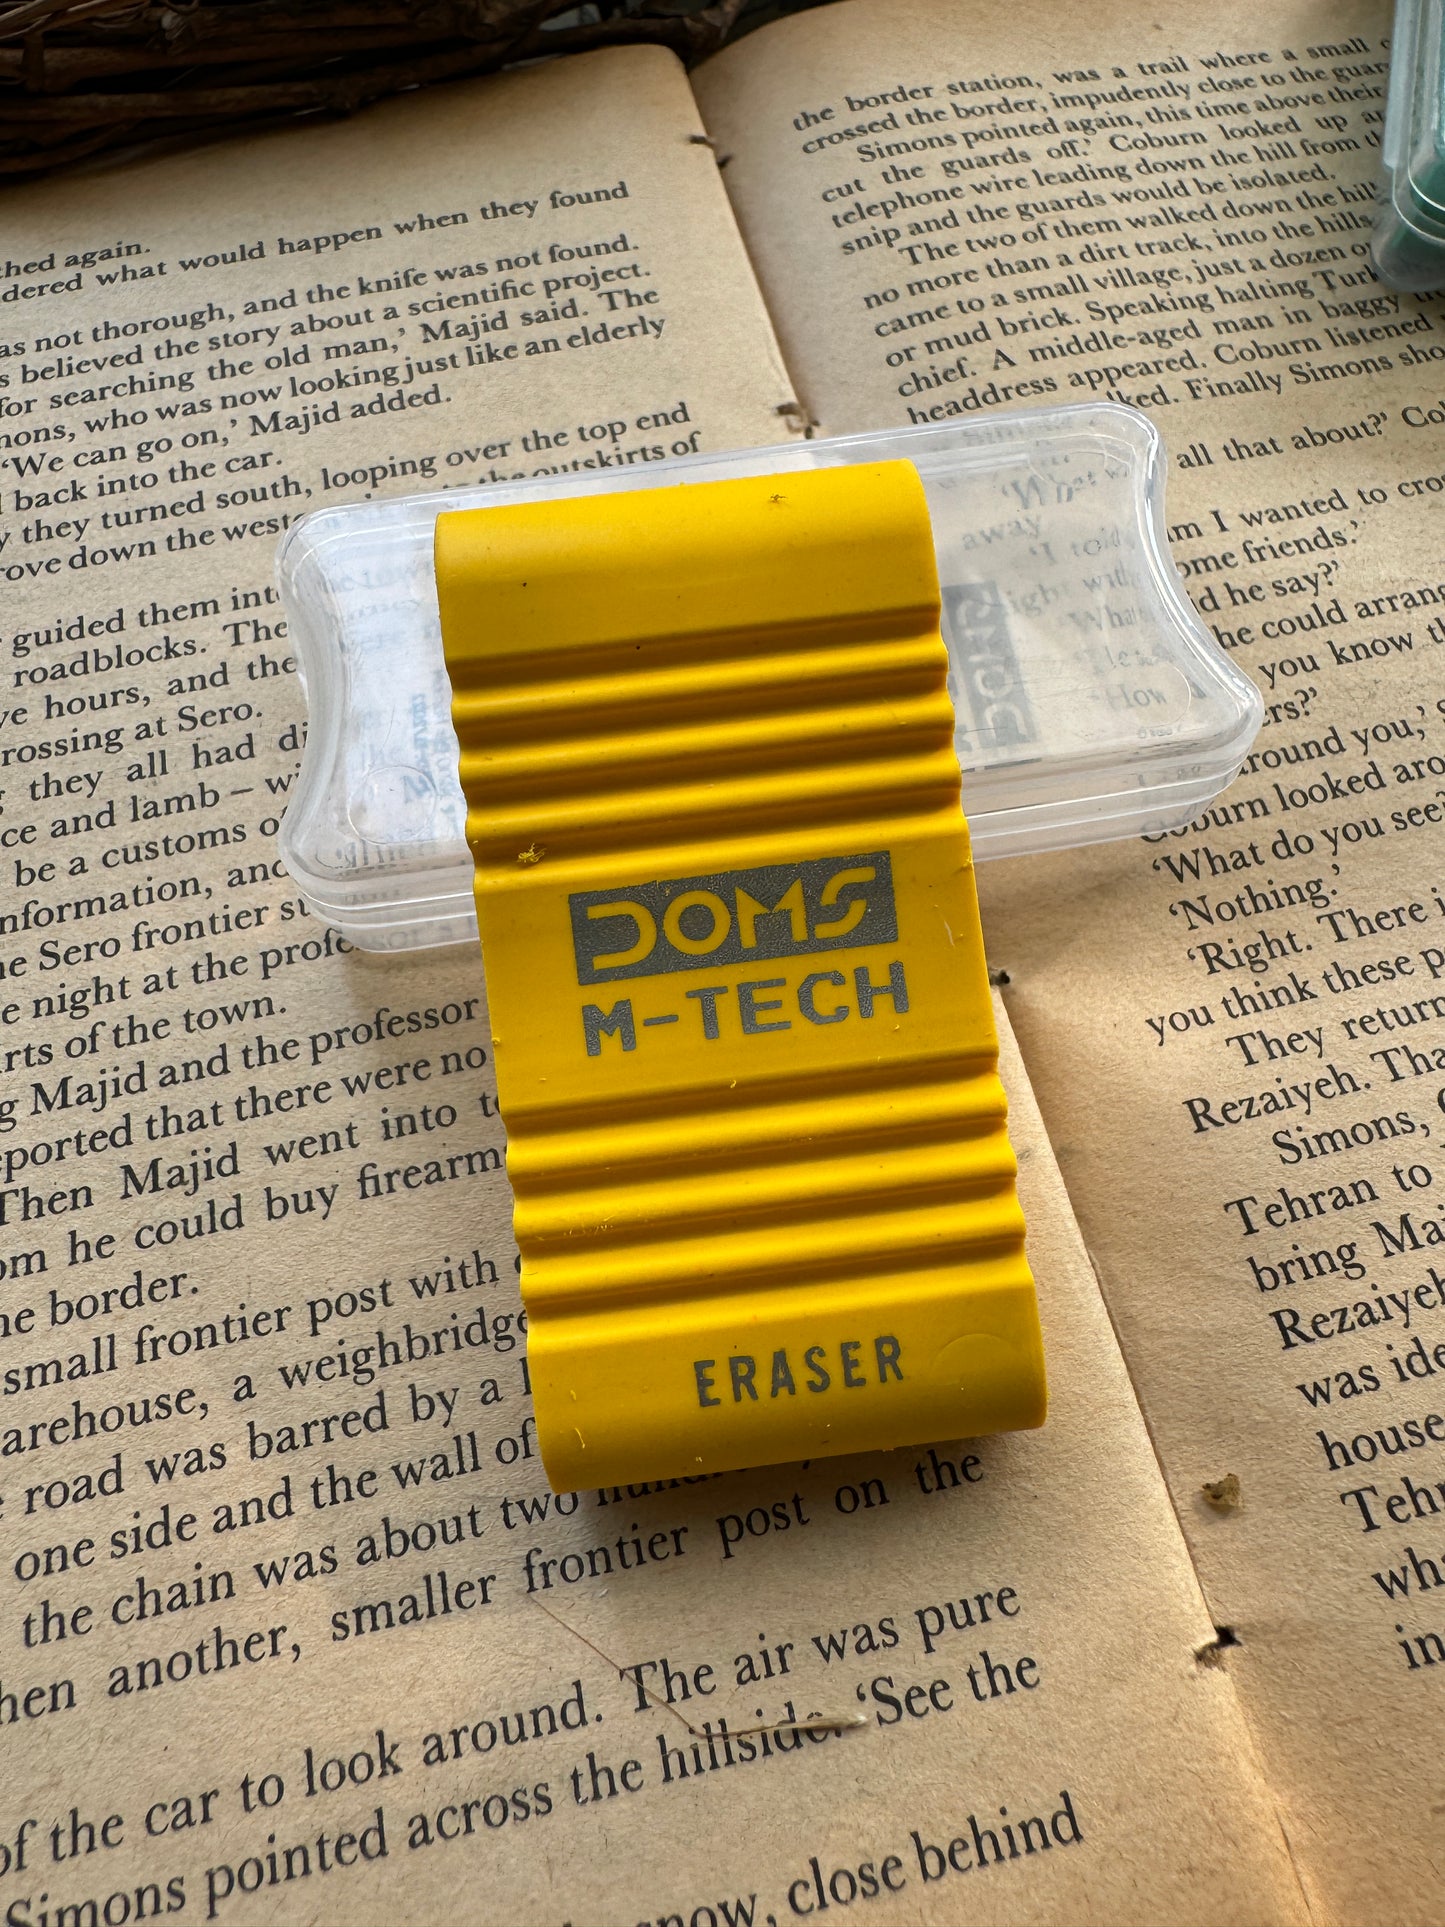 Doms M Tech Erasers